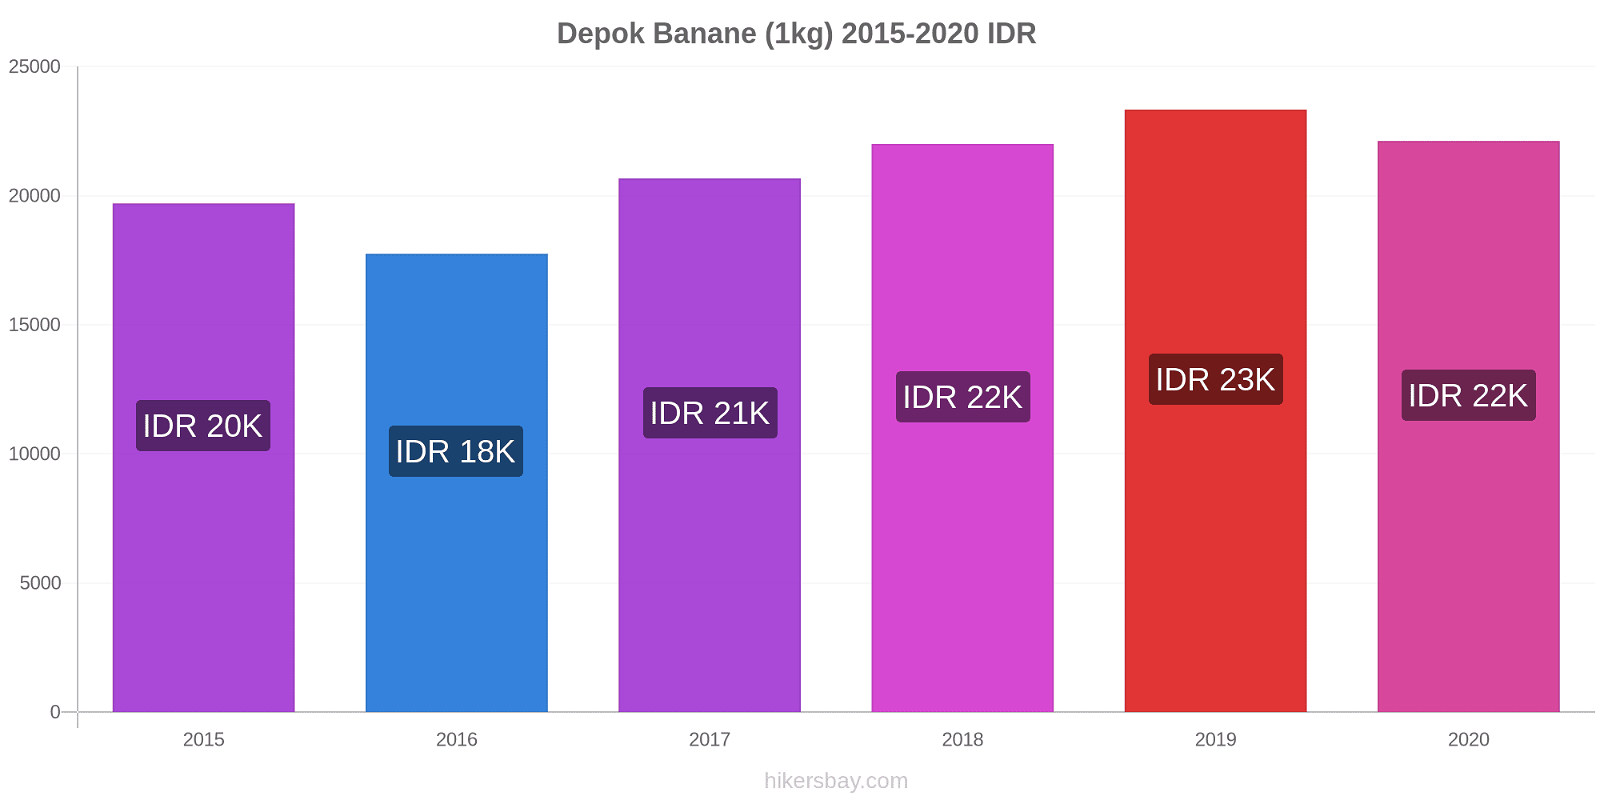 Depok variazioni di prezzo Banana (1kg) hikersbay.com